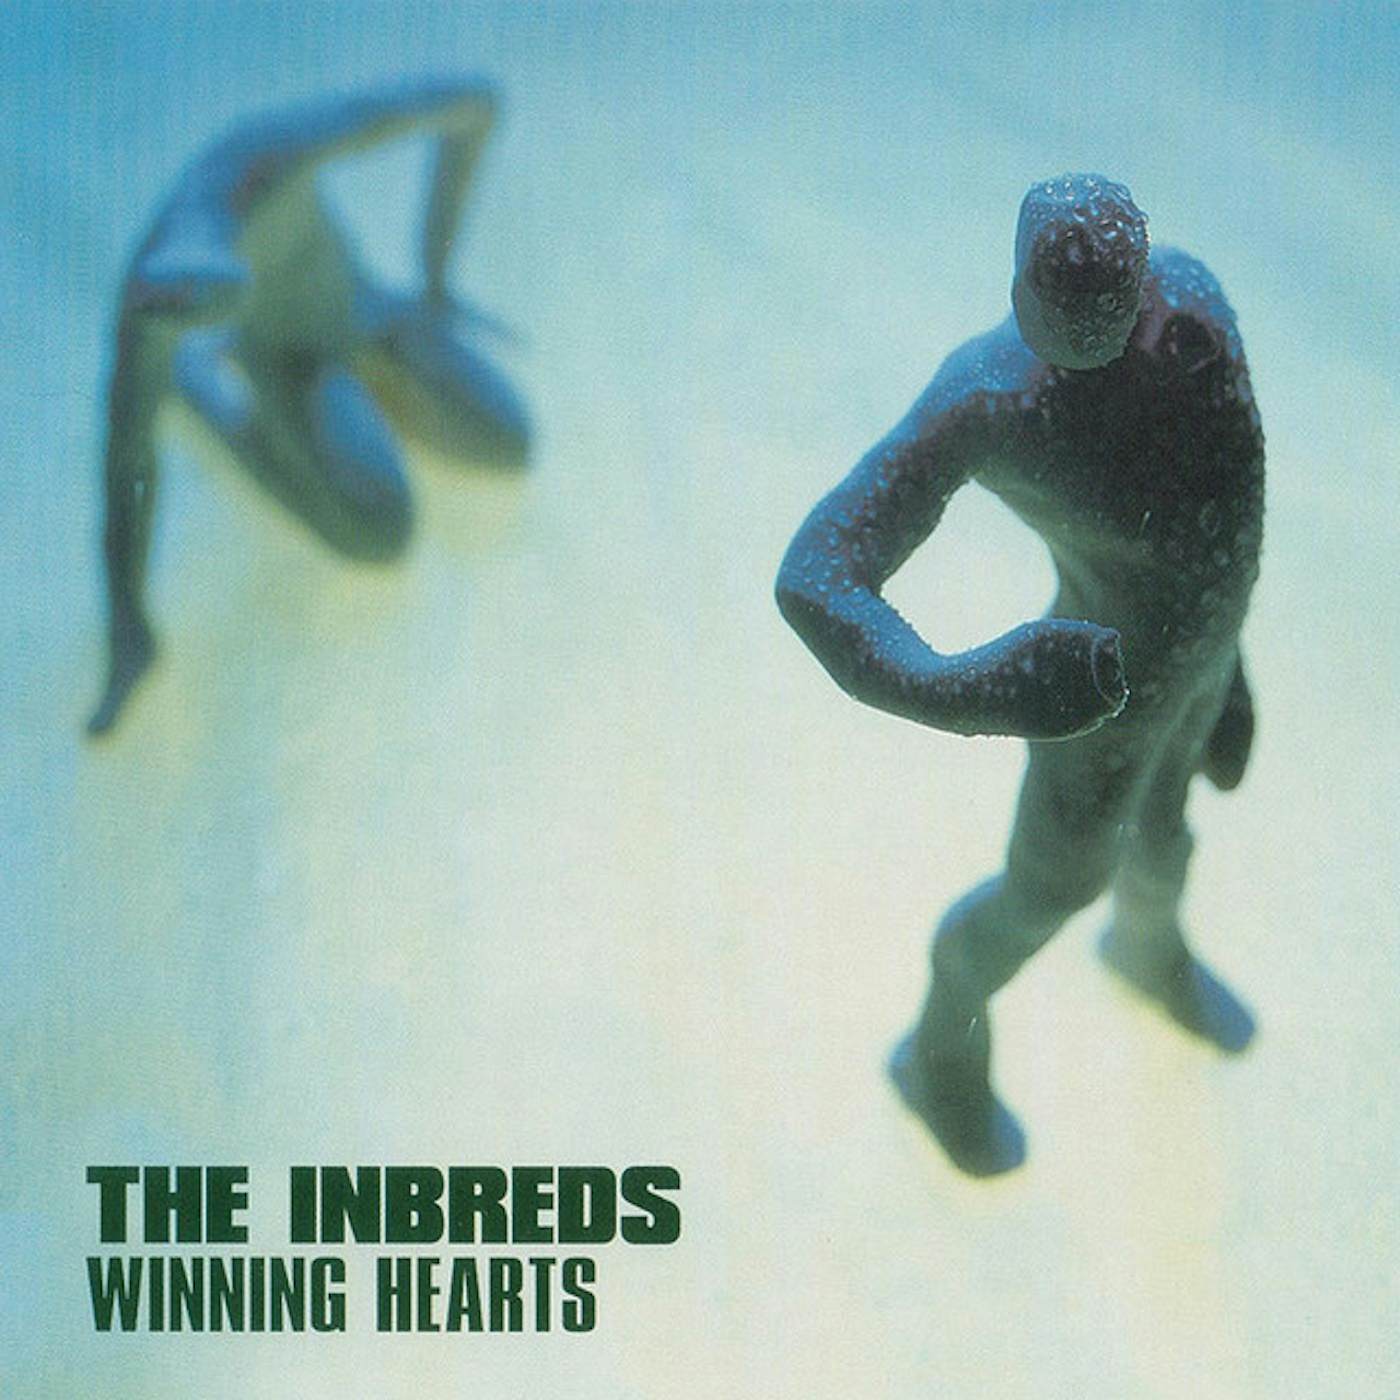 The Inbreds Winning Hearts Vinyl Record